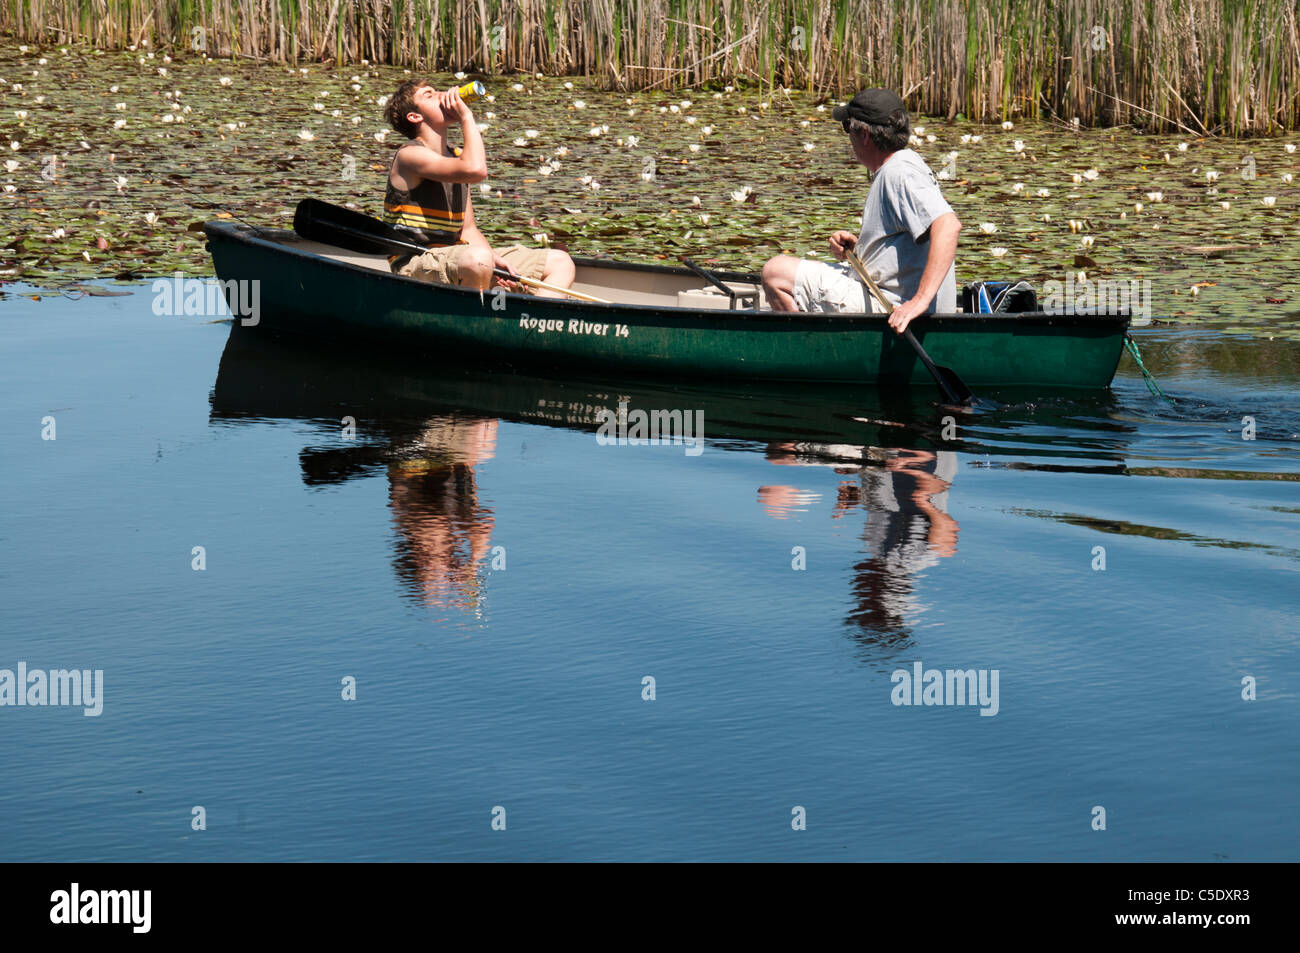 Two men in green canoe. Stock Photo